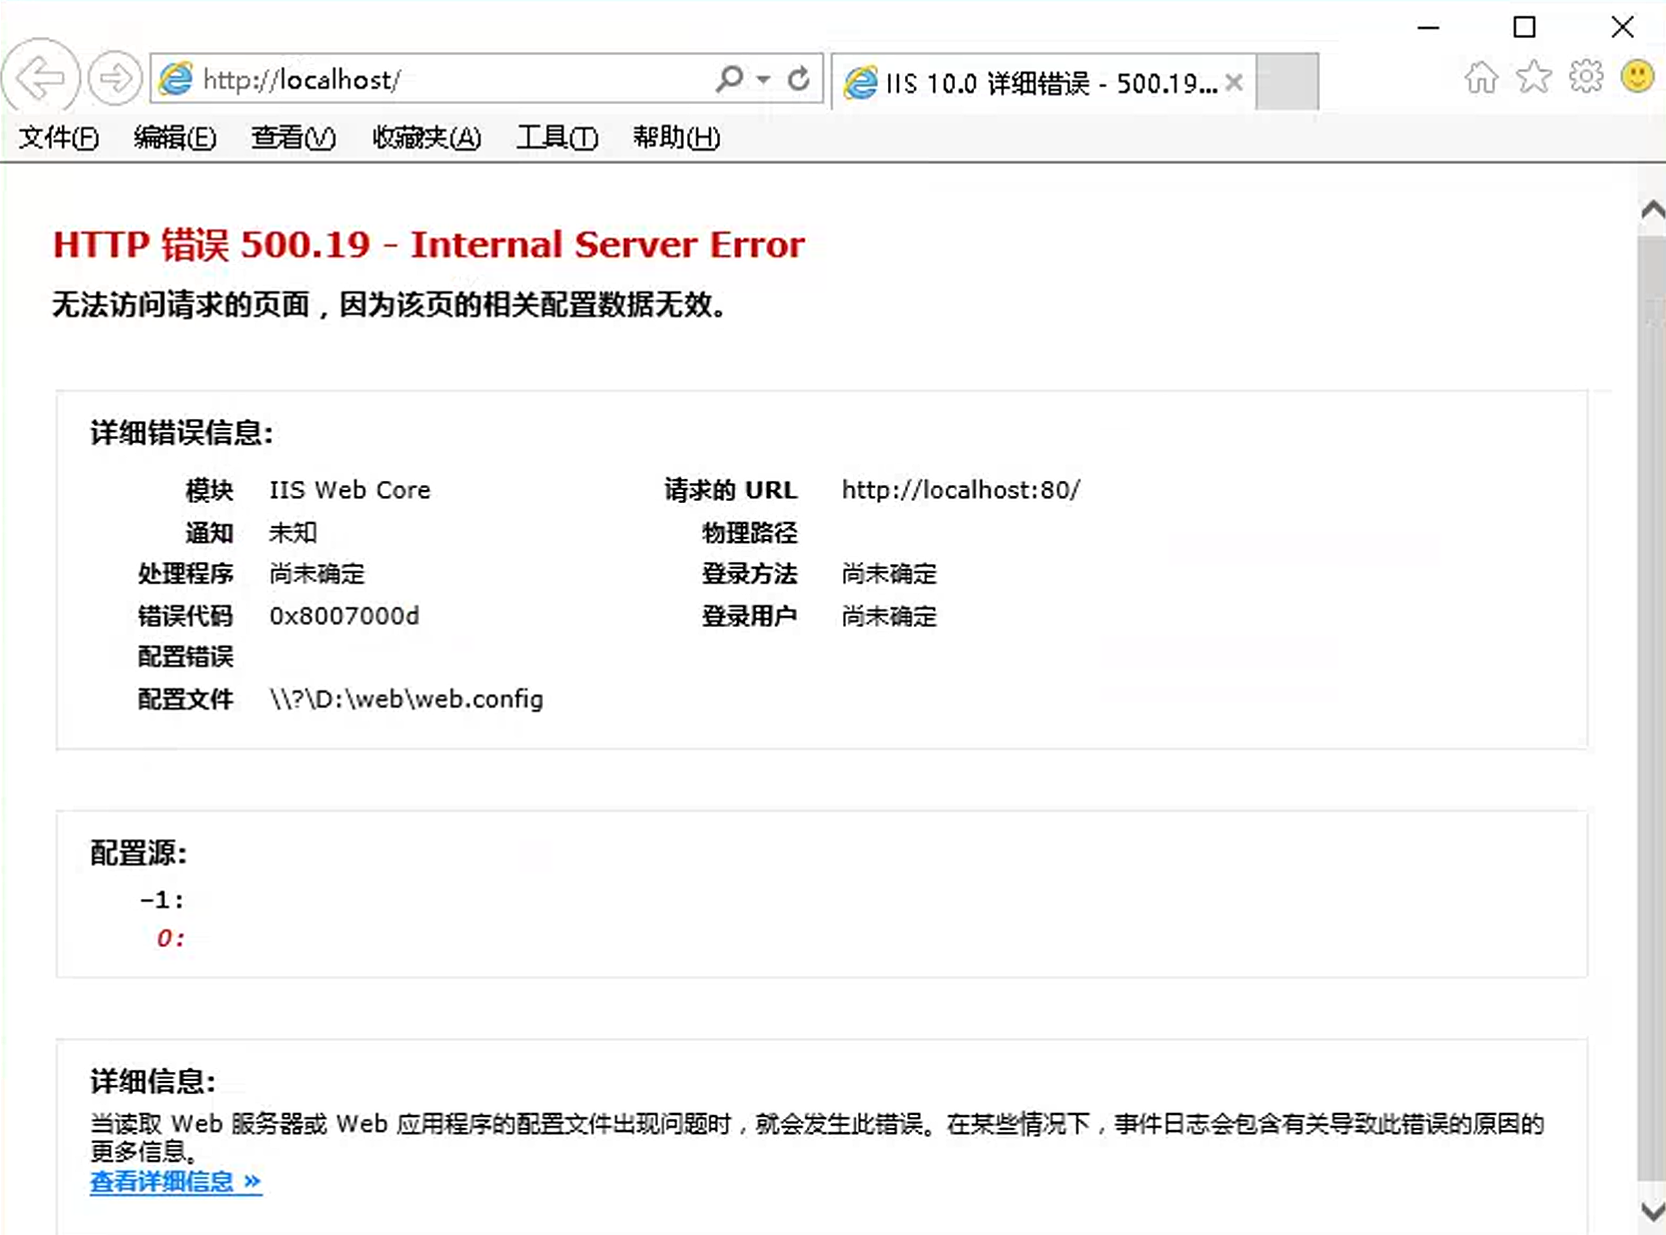 500.19 - Internal Server Error